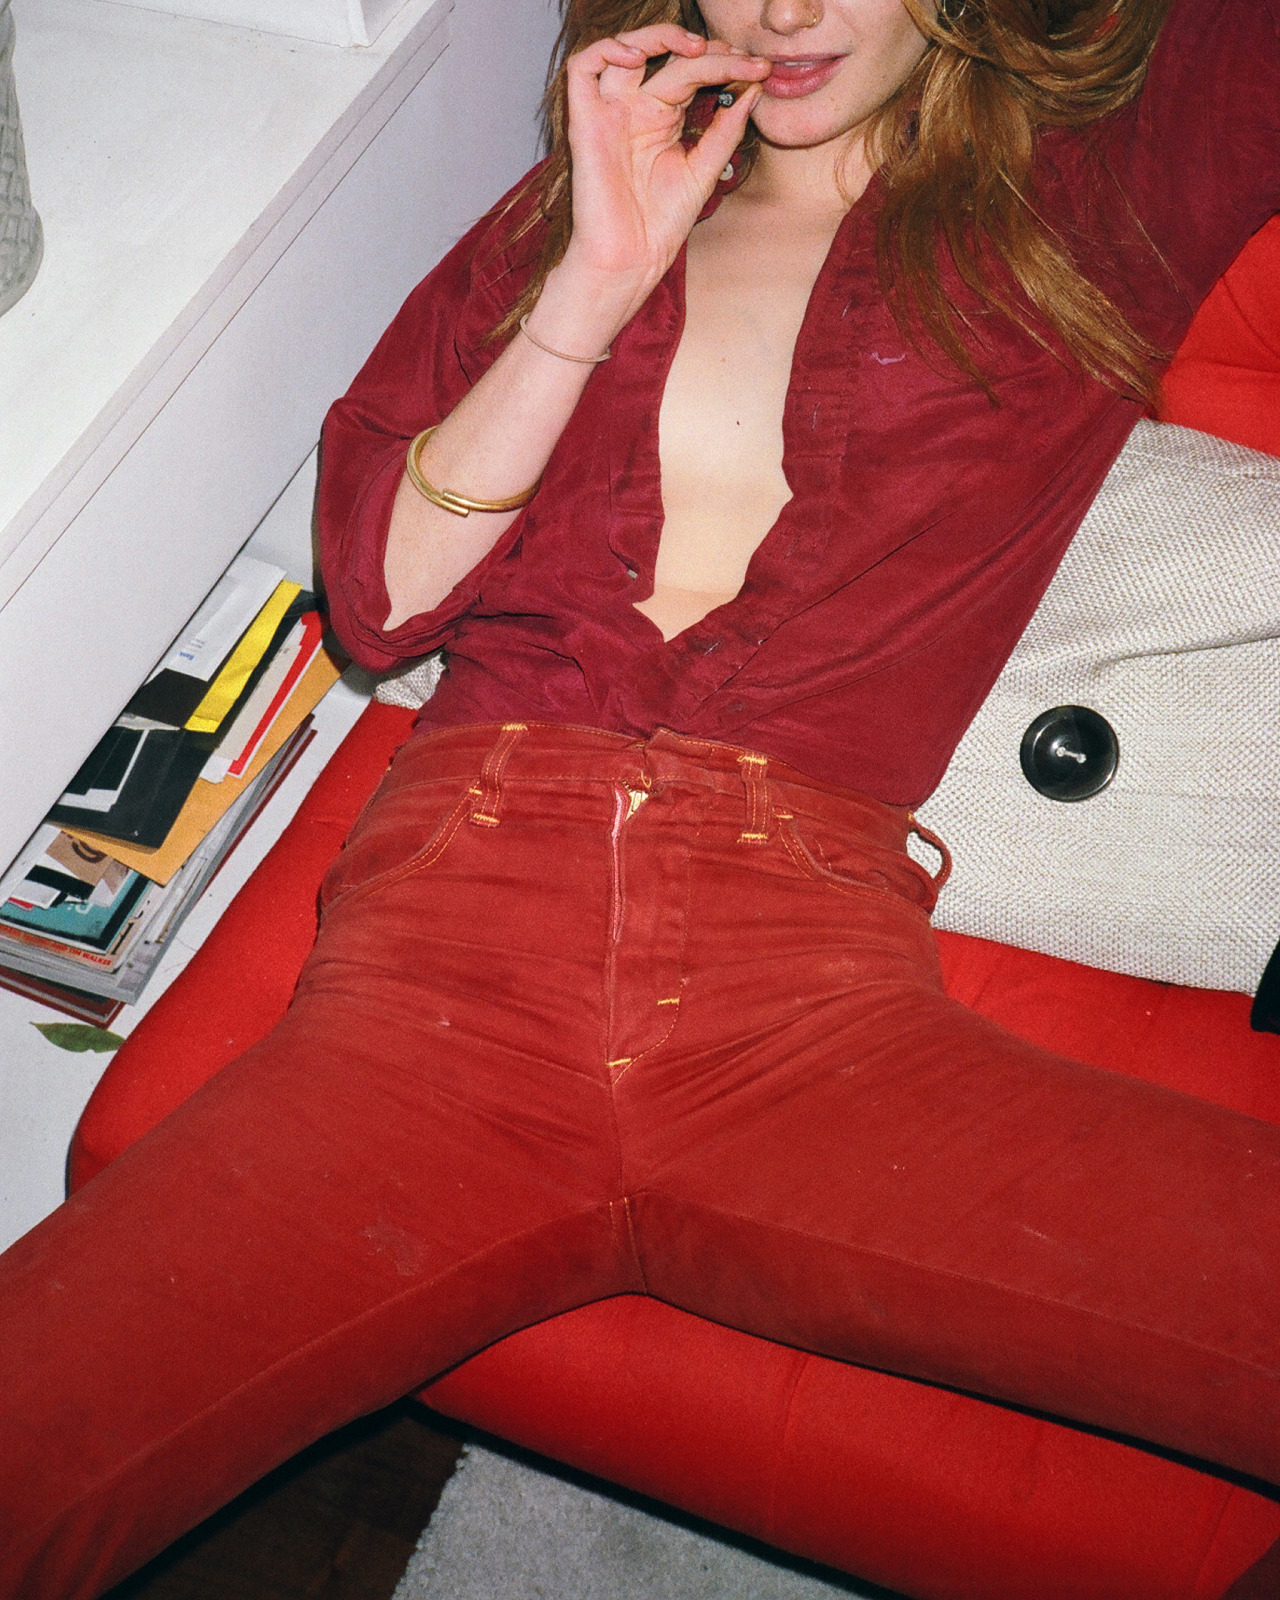 rebekahcampbellphoto:  Loren in red on red, November 2015 (Rebekah Campbell) 